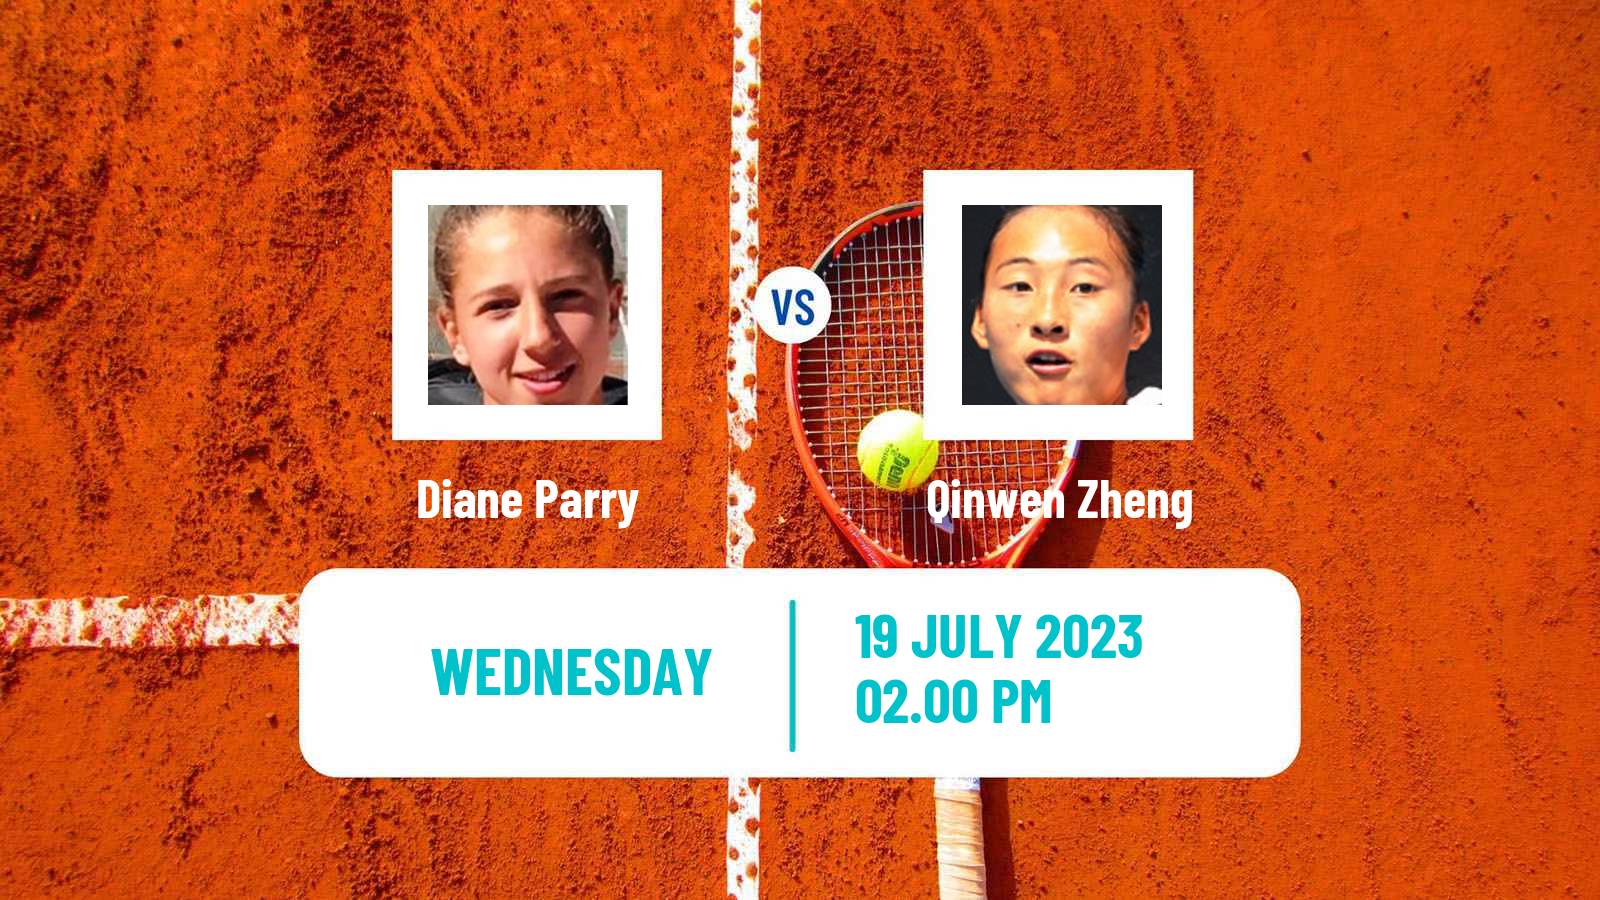 Tennis WTA Palermo Diane Parry - Qinwen Zheng